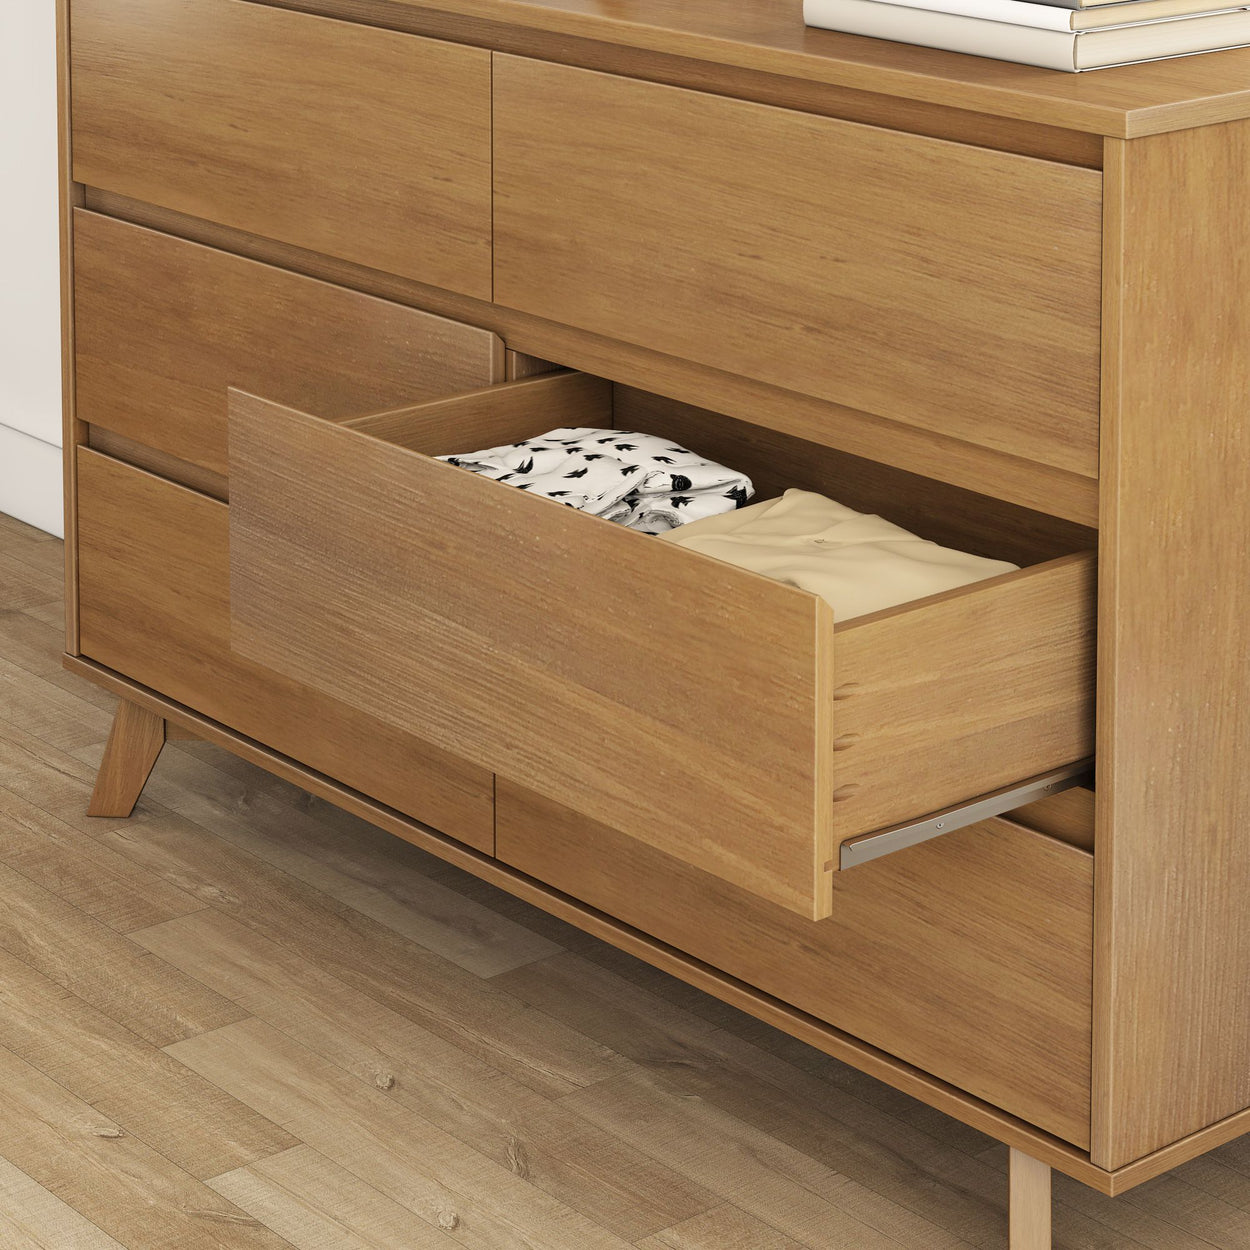 2100216000-007 : Furniture Scandinavian 6 Drawer Dresser, Pecan